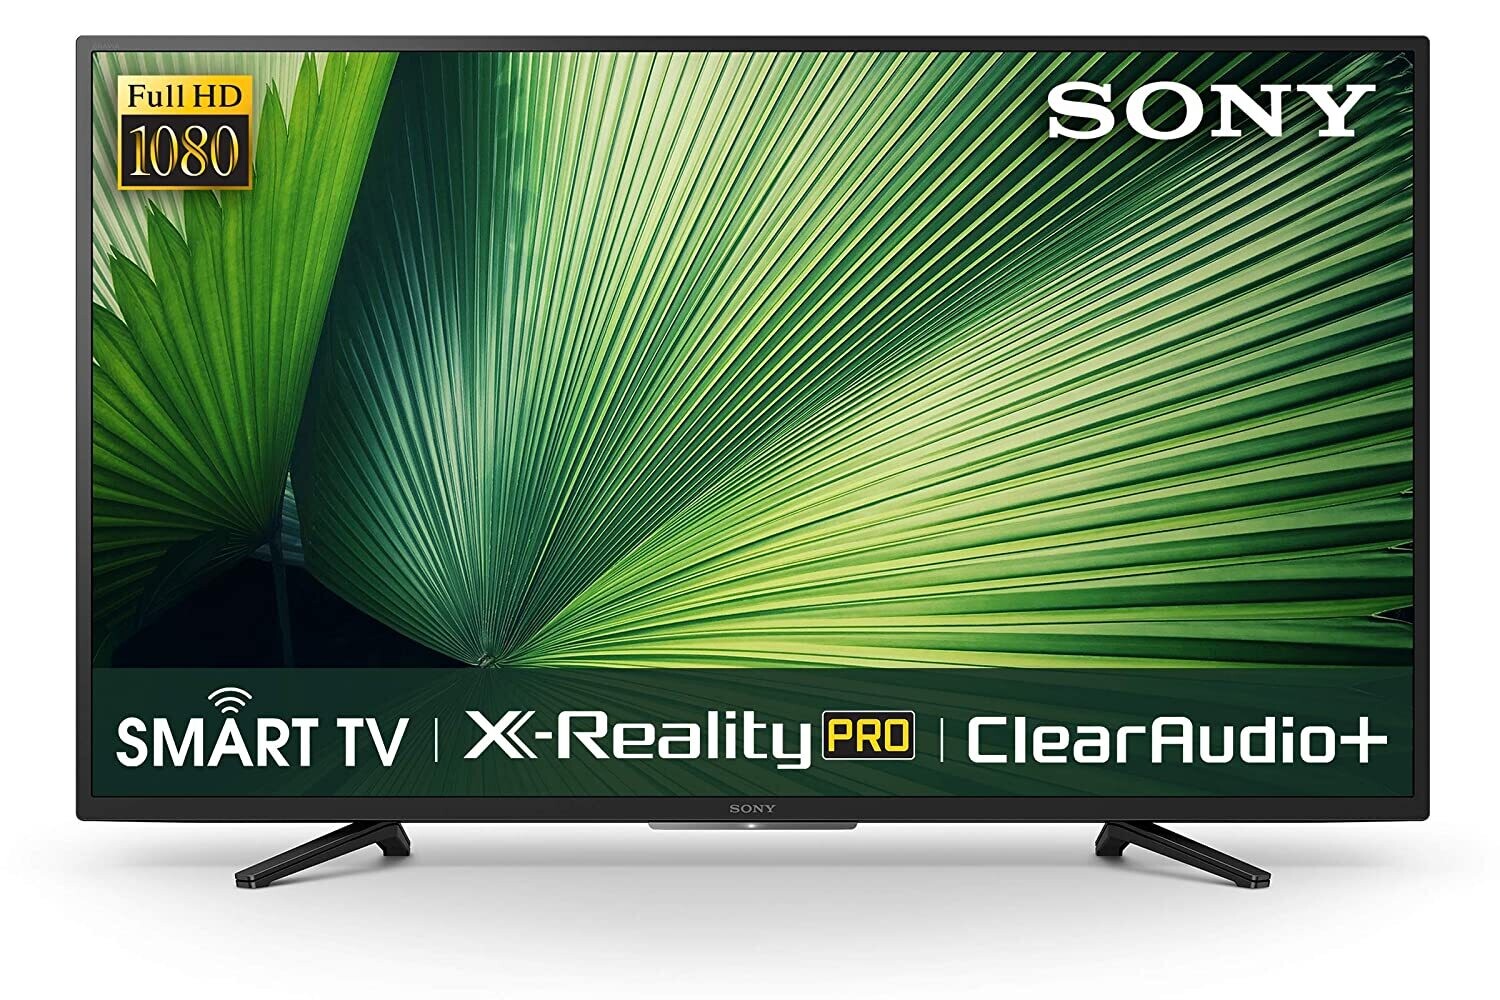 Sony Bravia | 108 cm (43 inches) | Full HD | Smart LED TV | KDL-43W6600